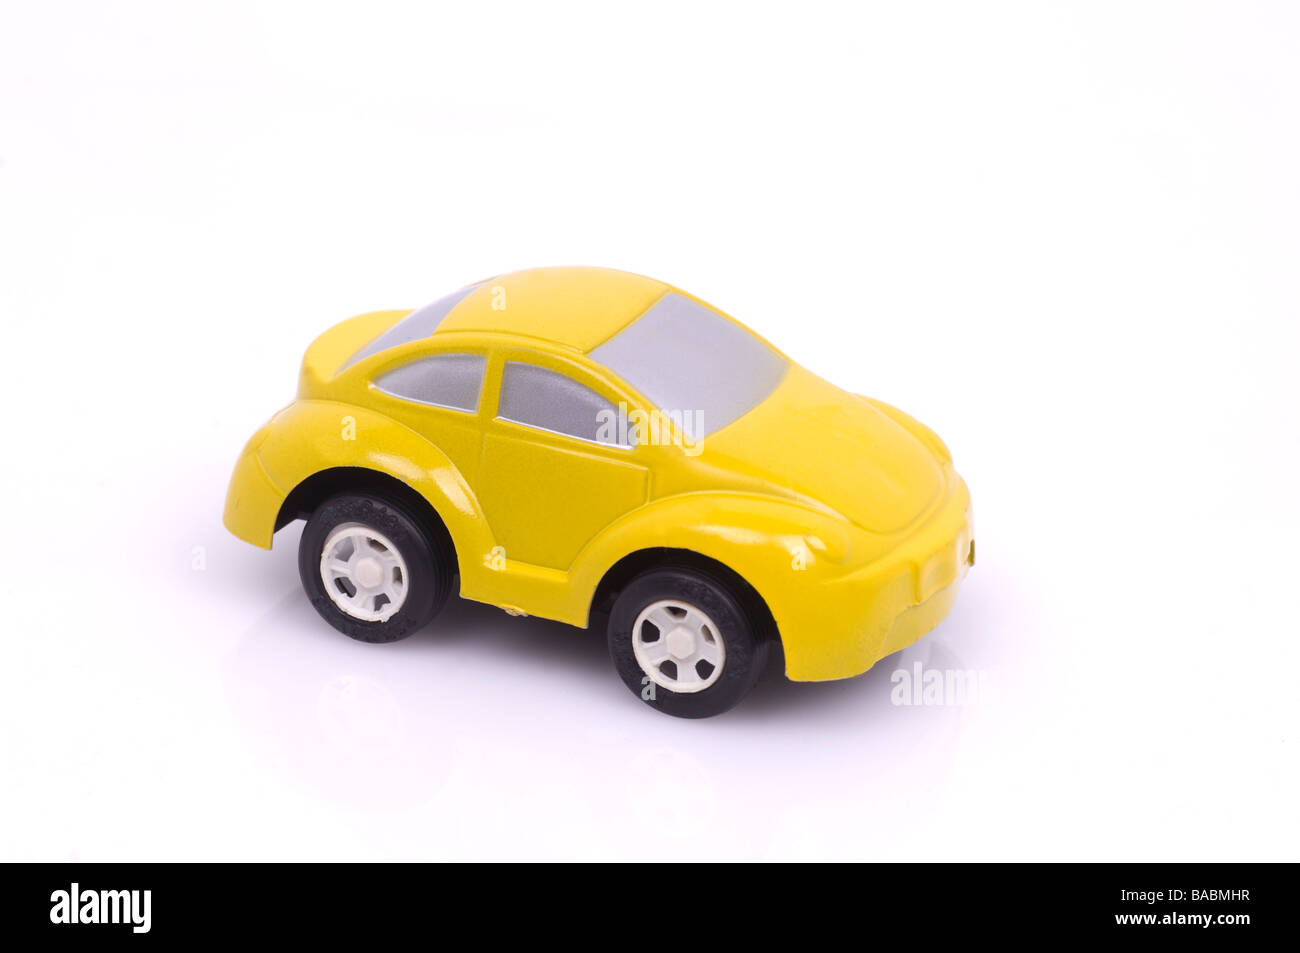 Carro de juguete fotografías e imágenes de alta resolución - Alamy